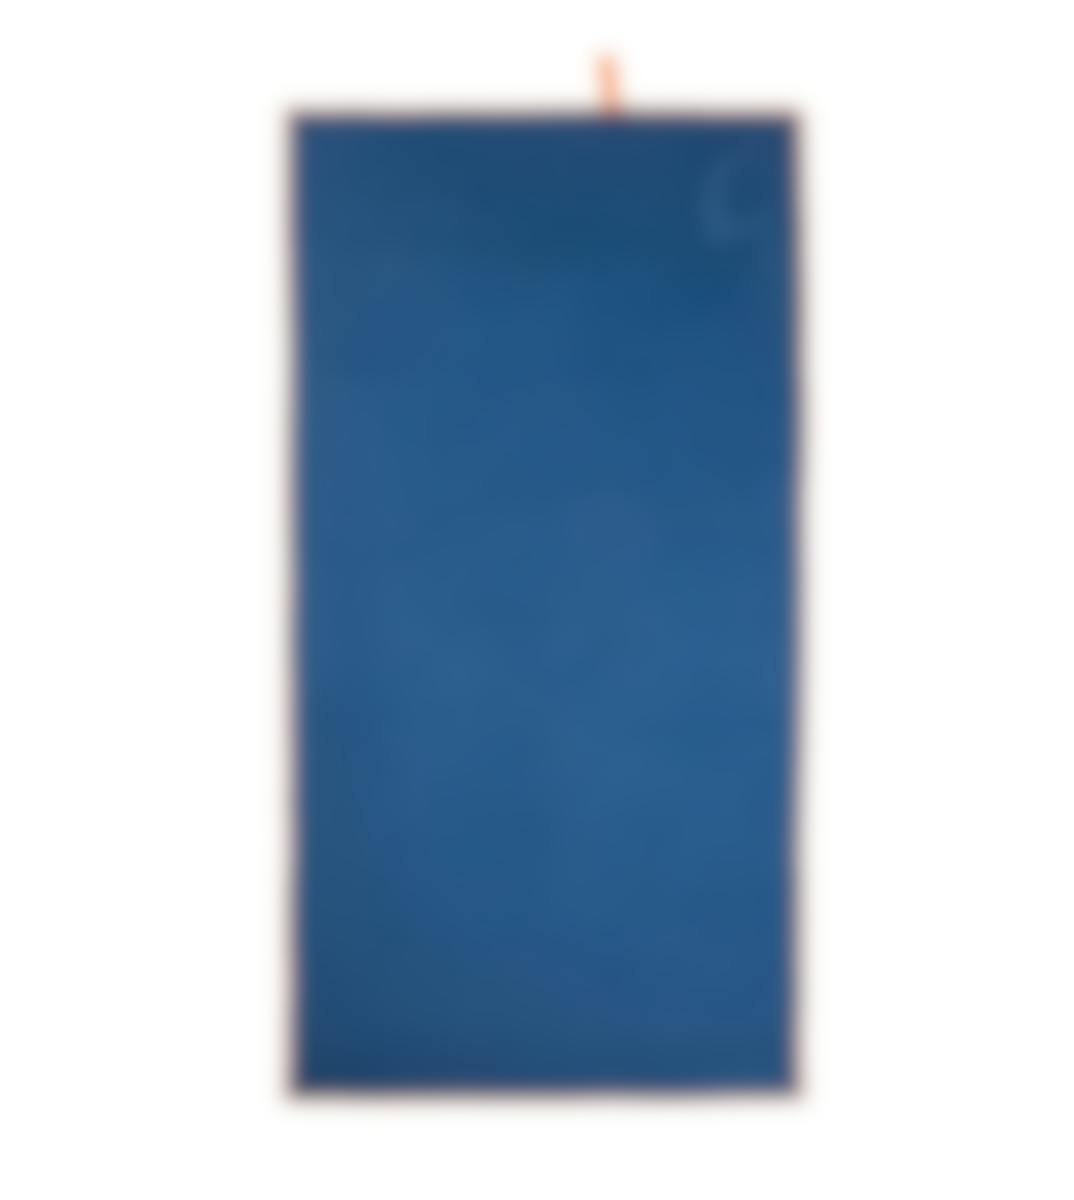 Jules Clarysse 2-delige handdoekenset microfiber blue